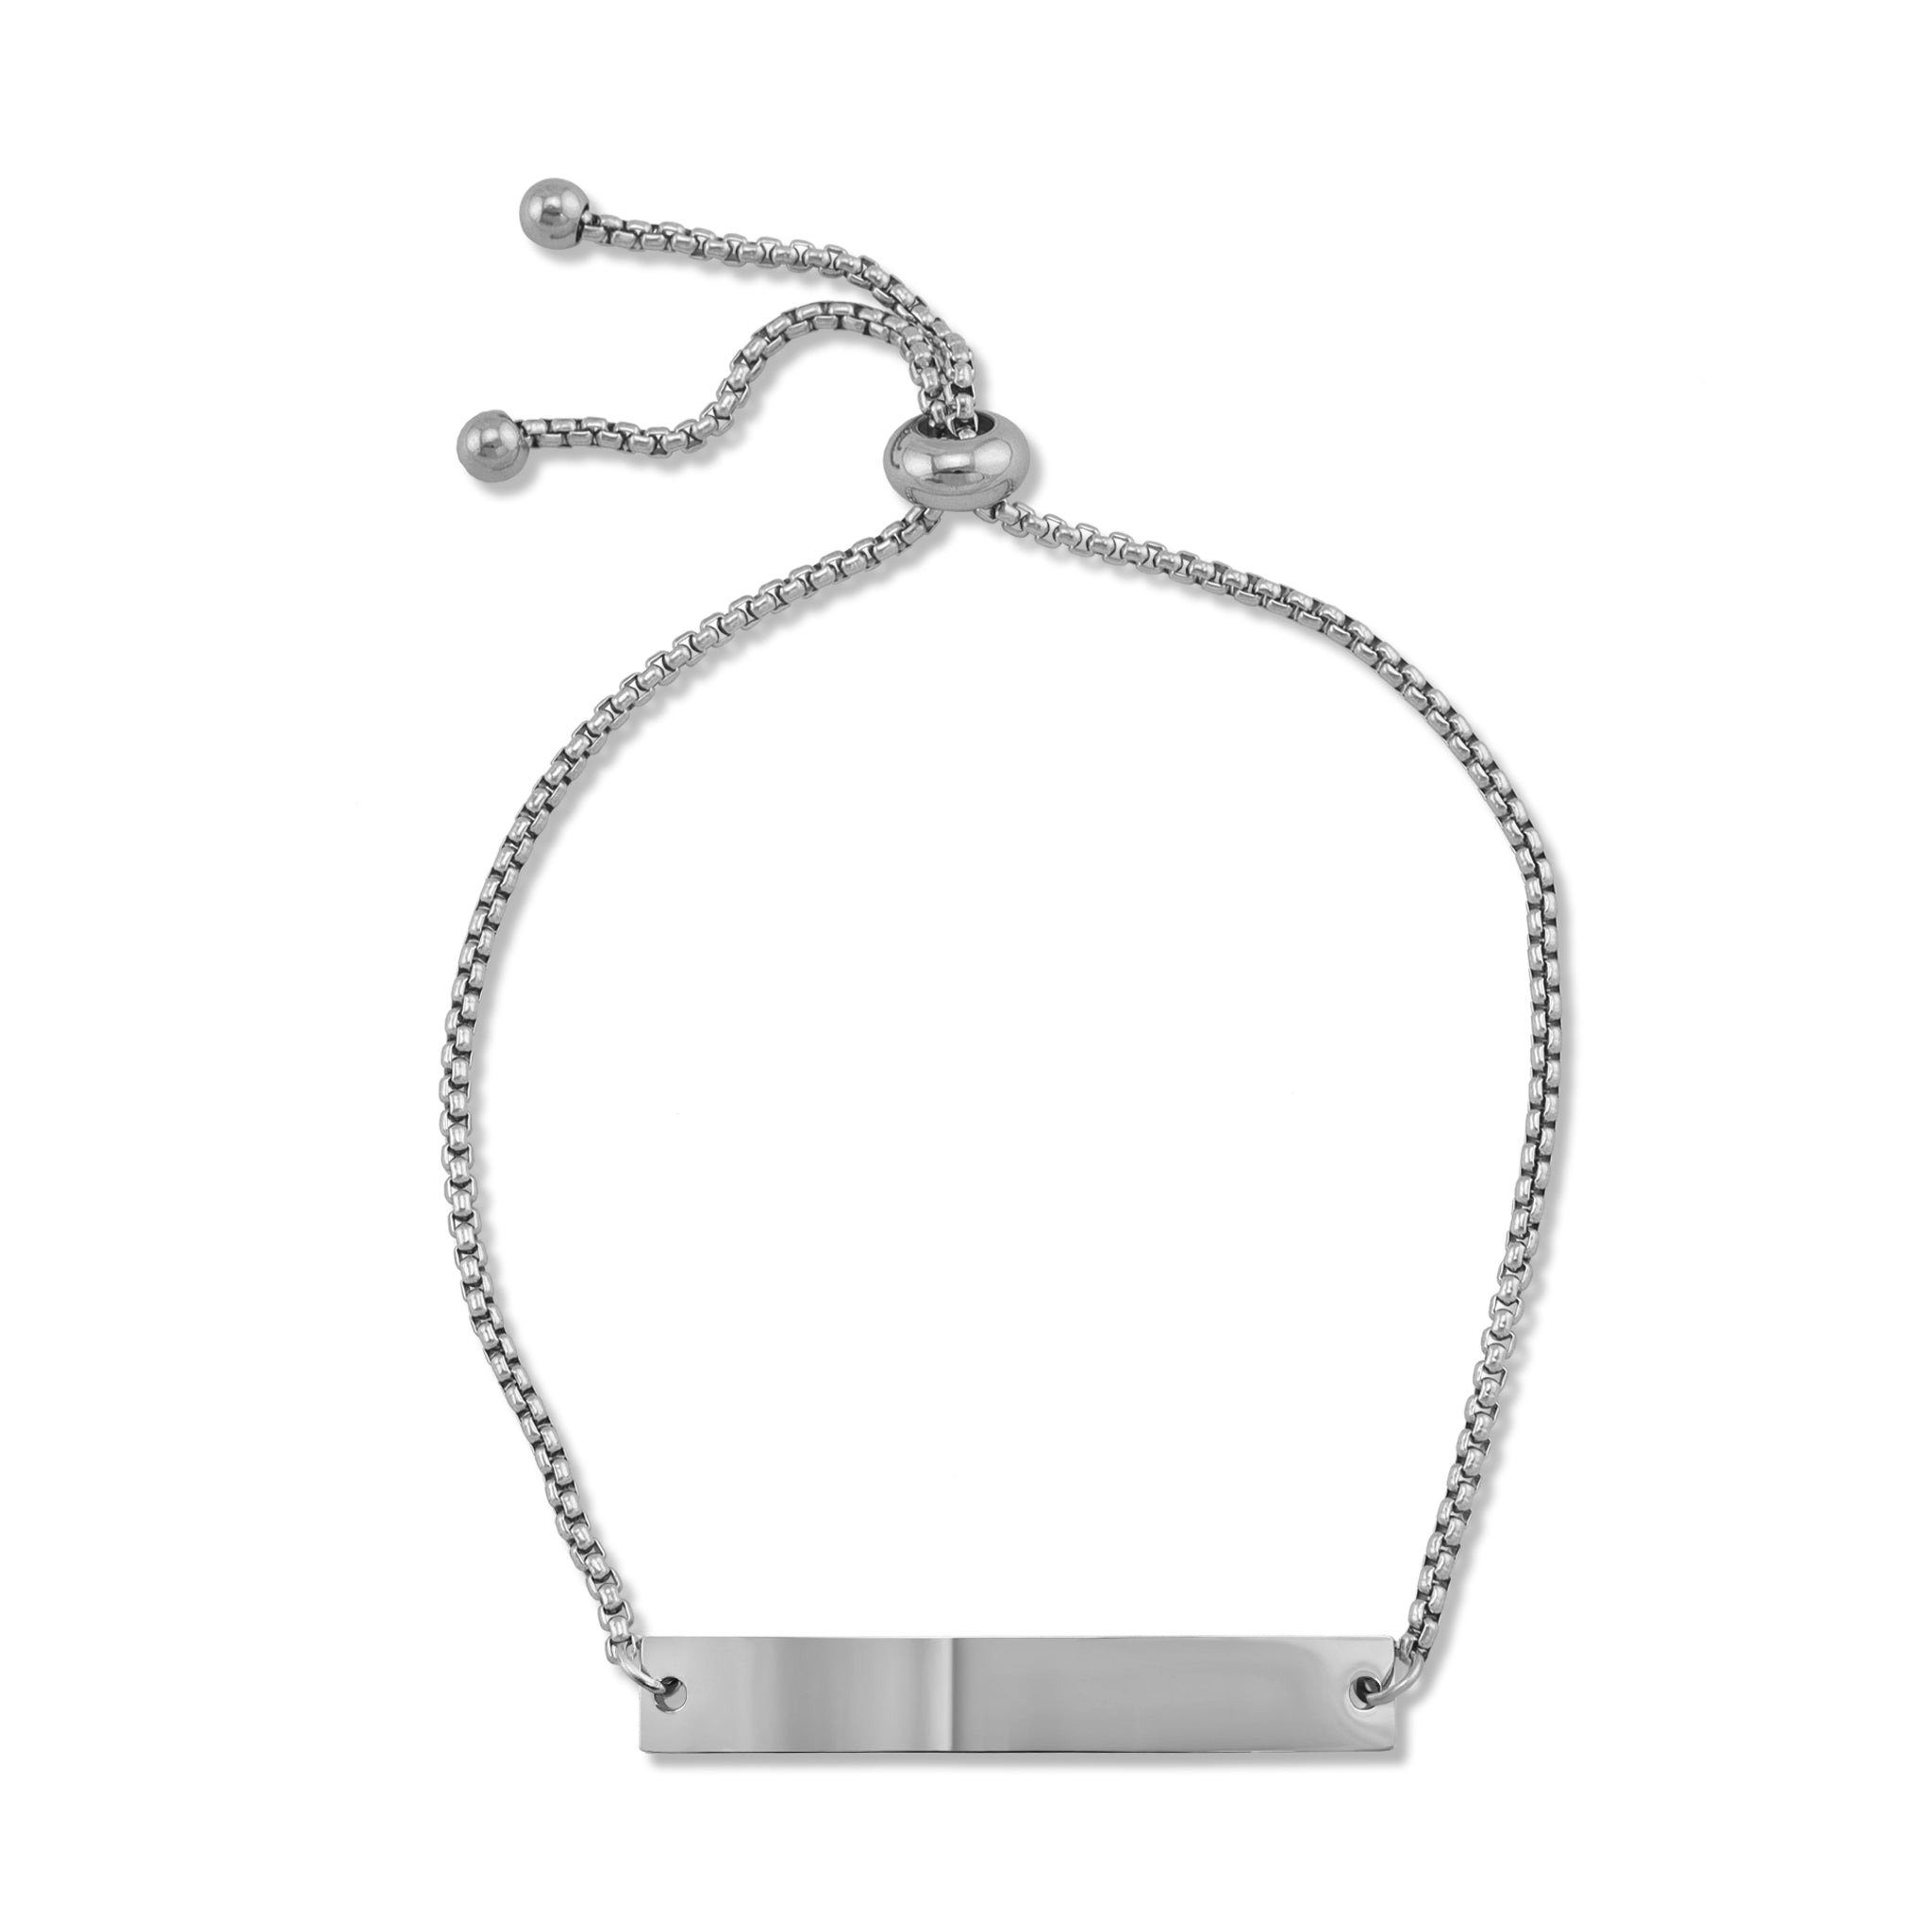 POW Bracelet in Sterling Silver - Cuff Bracelet - US Army gifts hero -  Nadin Art Design - Personalized Jewelry